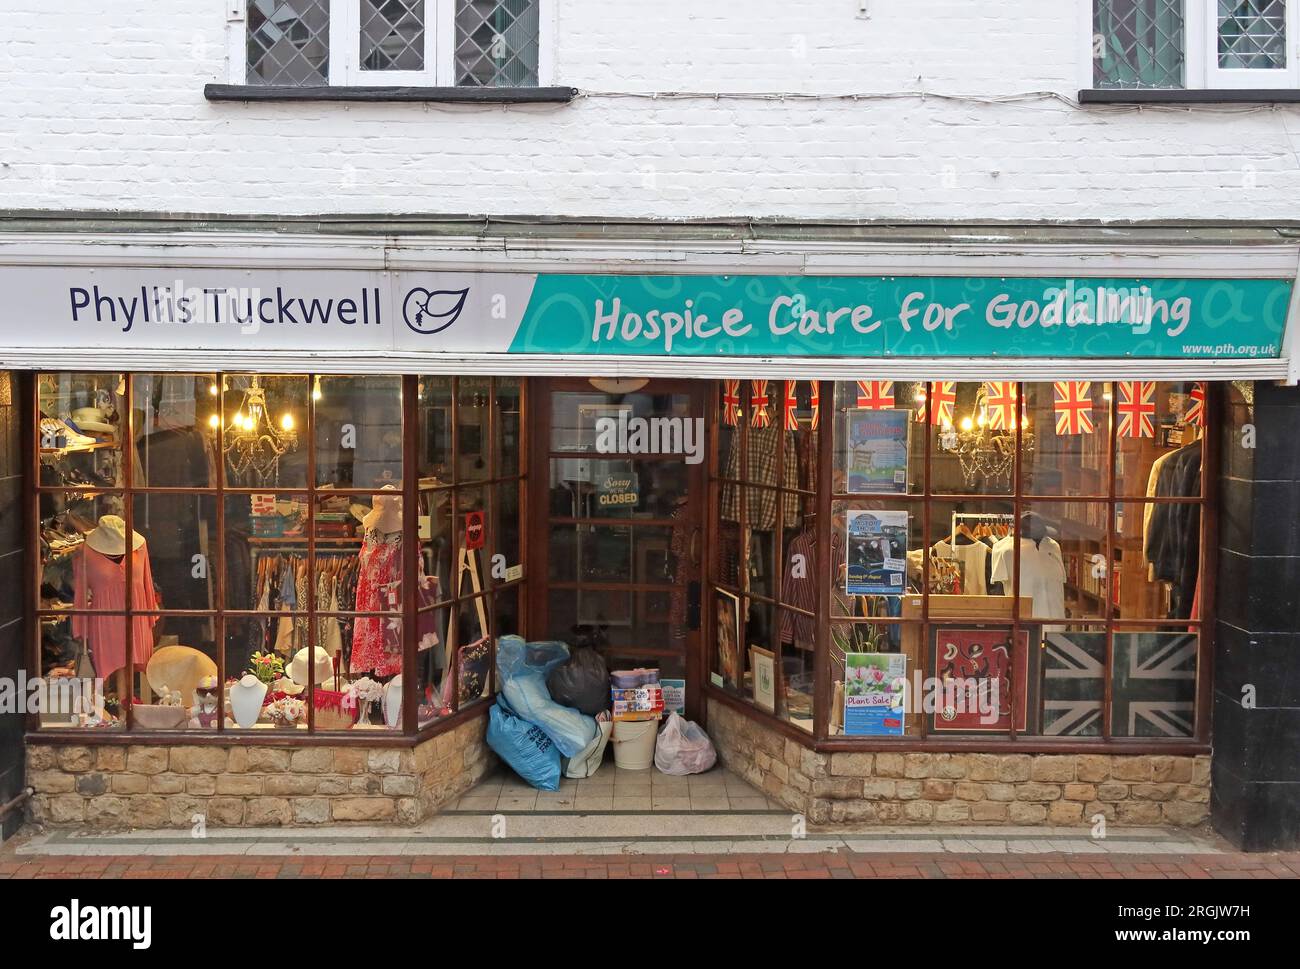 Phyllis Tuckwell Wohltätigkeitsladen, Hospice Care for Godalming, 114 High St, Godalming, Surrey, England, UK, GU7 1DW Stockfoto